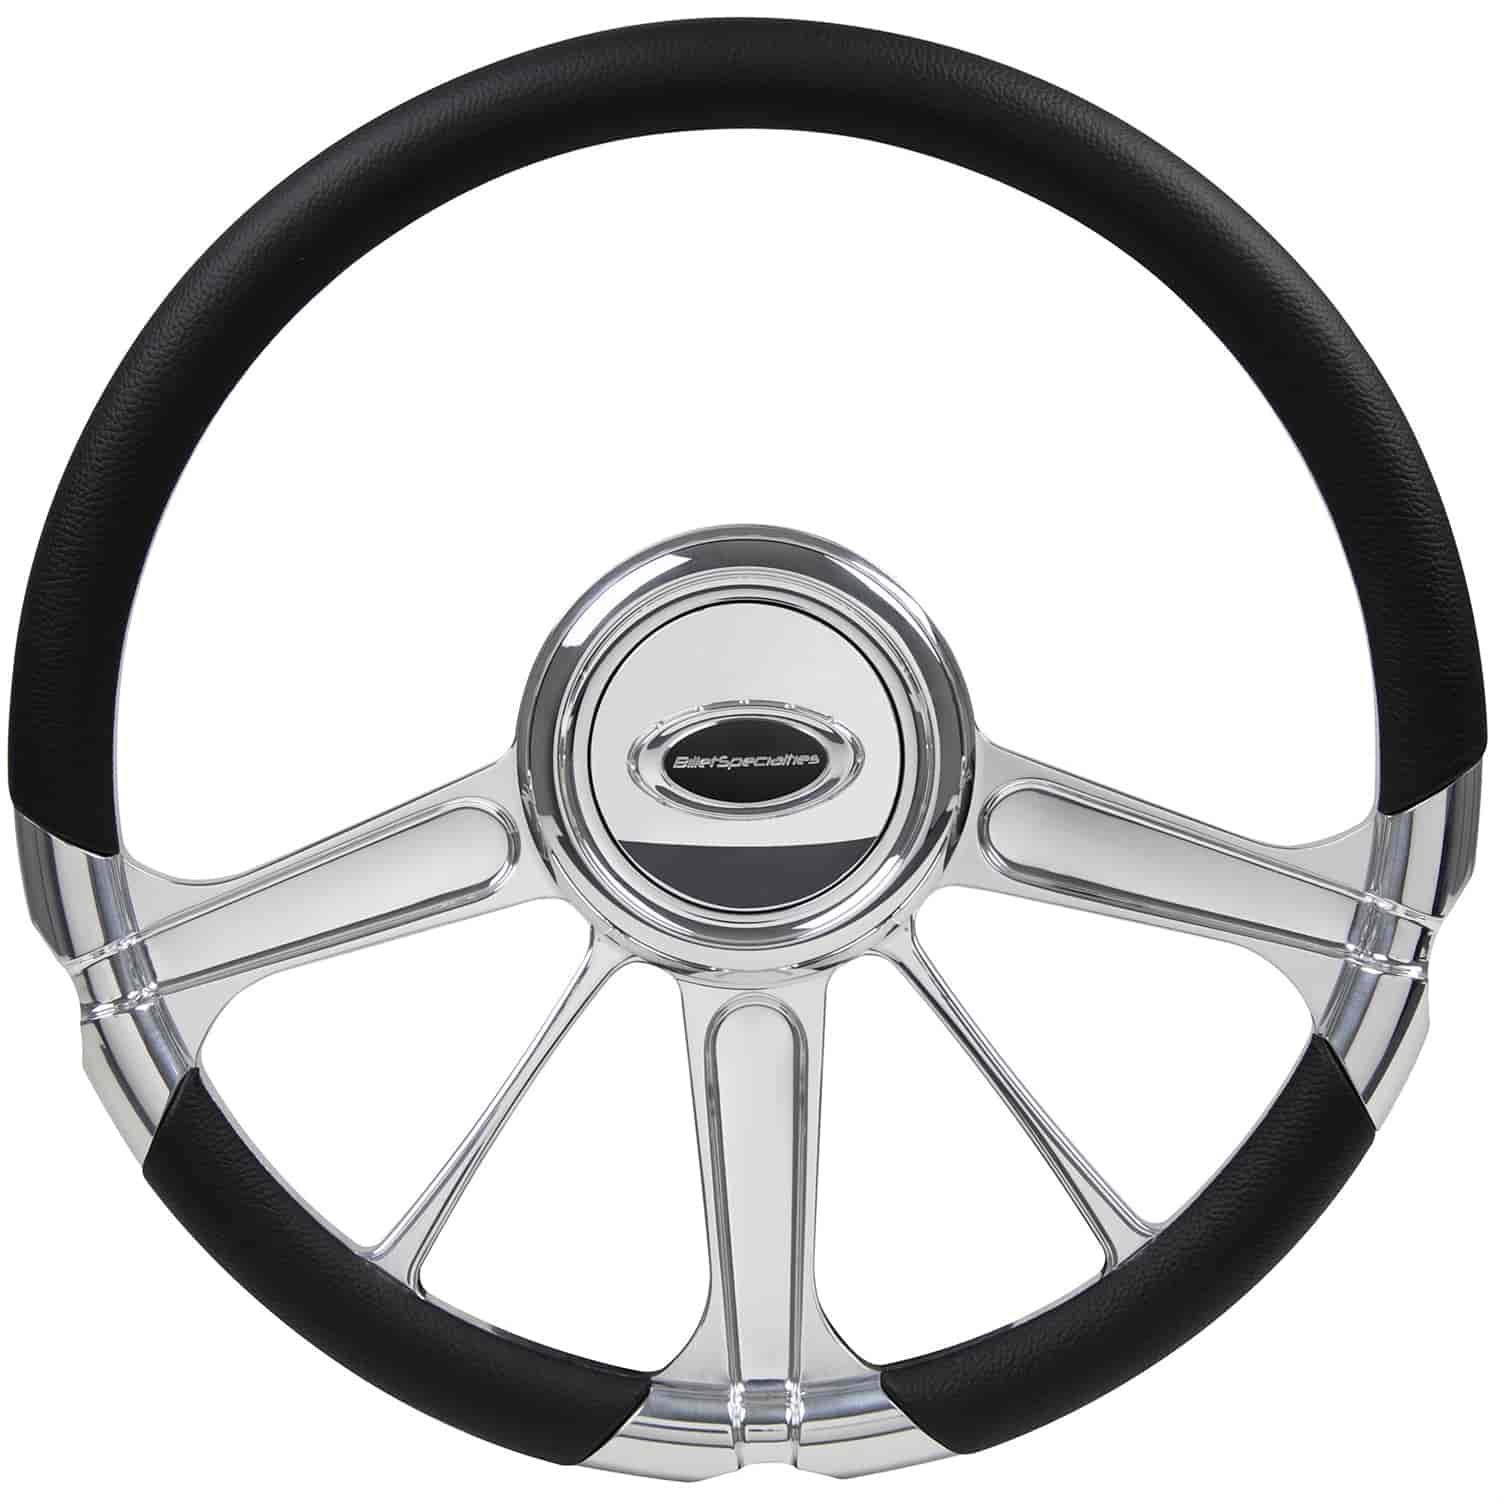 Aluminum Select Edition "Invader" Steering Wheel